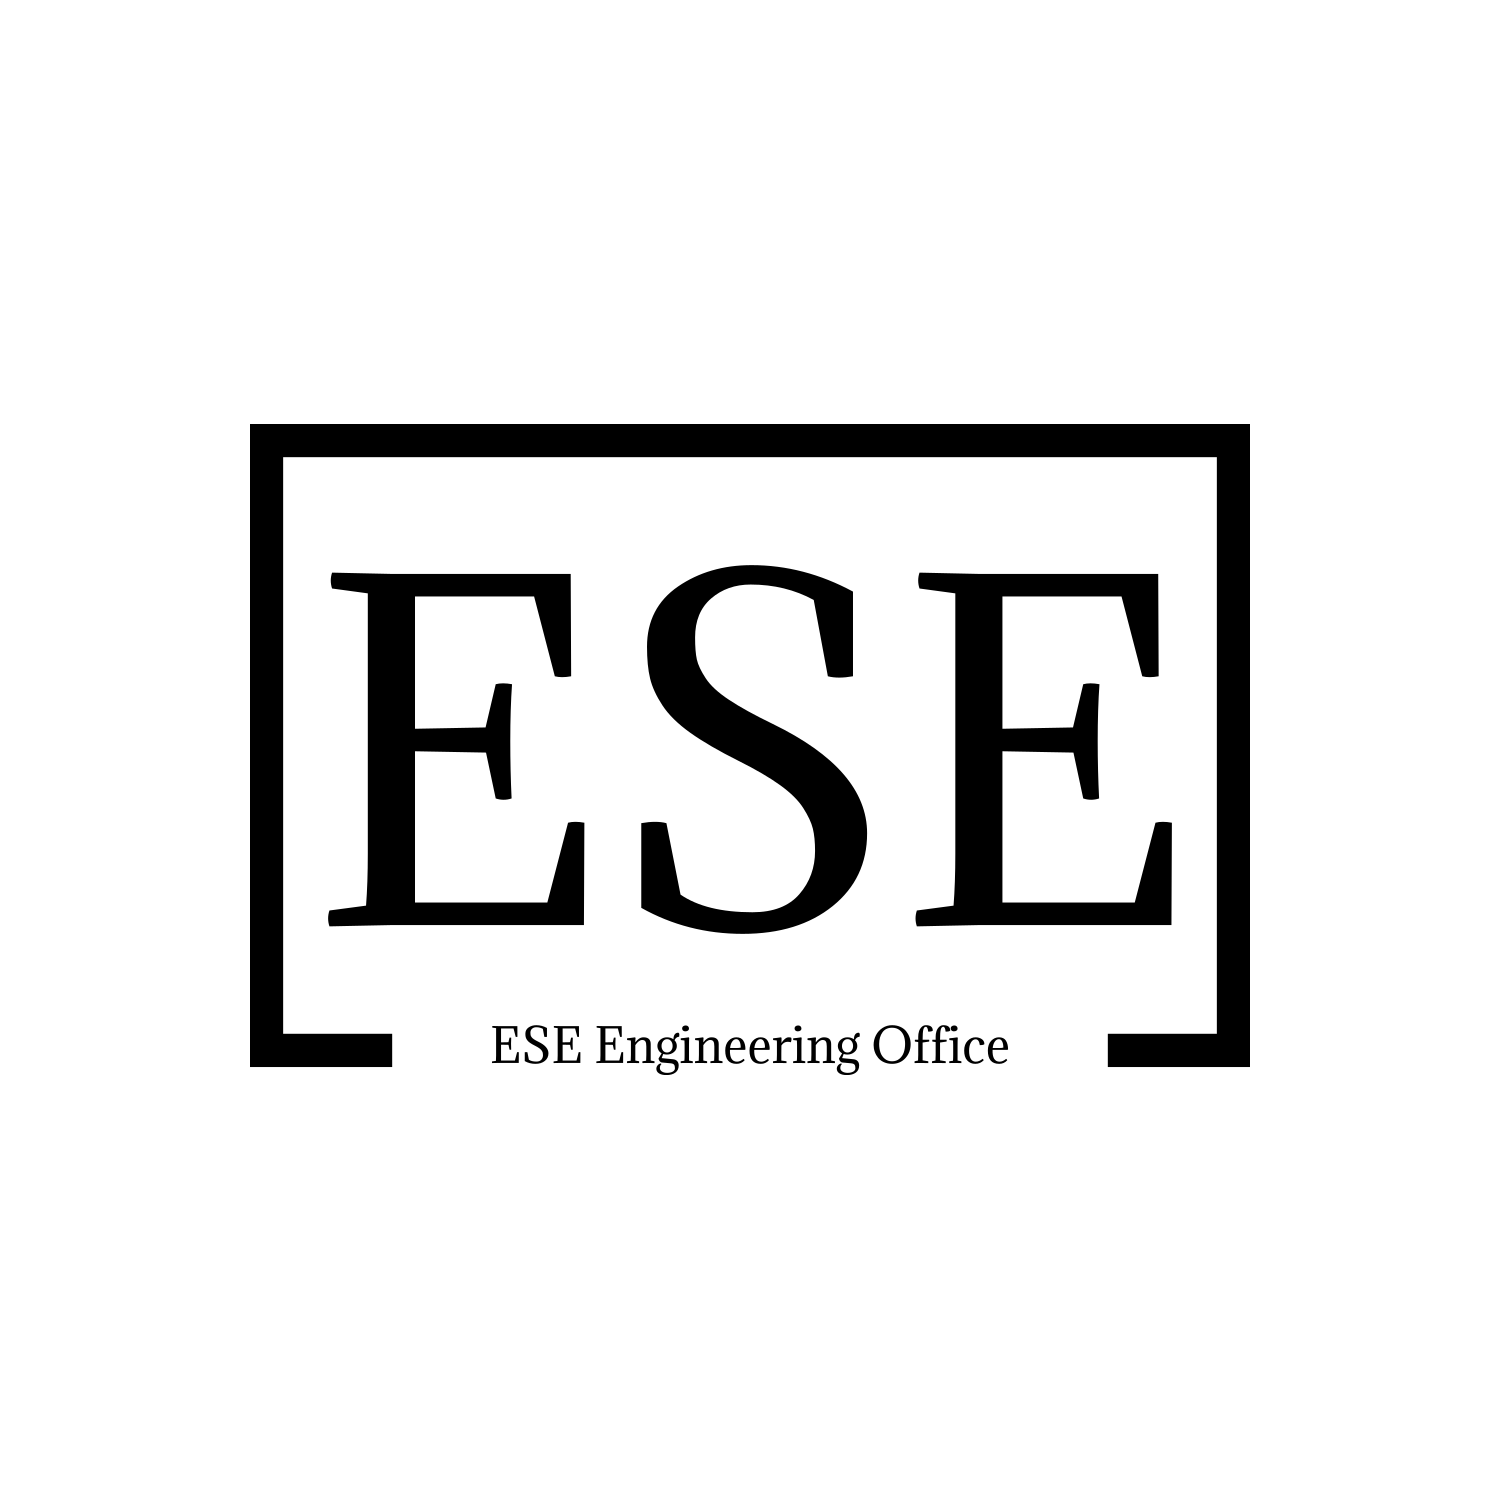 ESE Engineering Office Ltd.